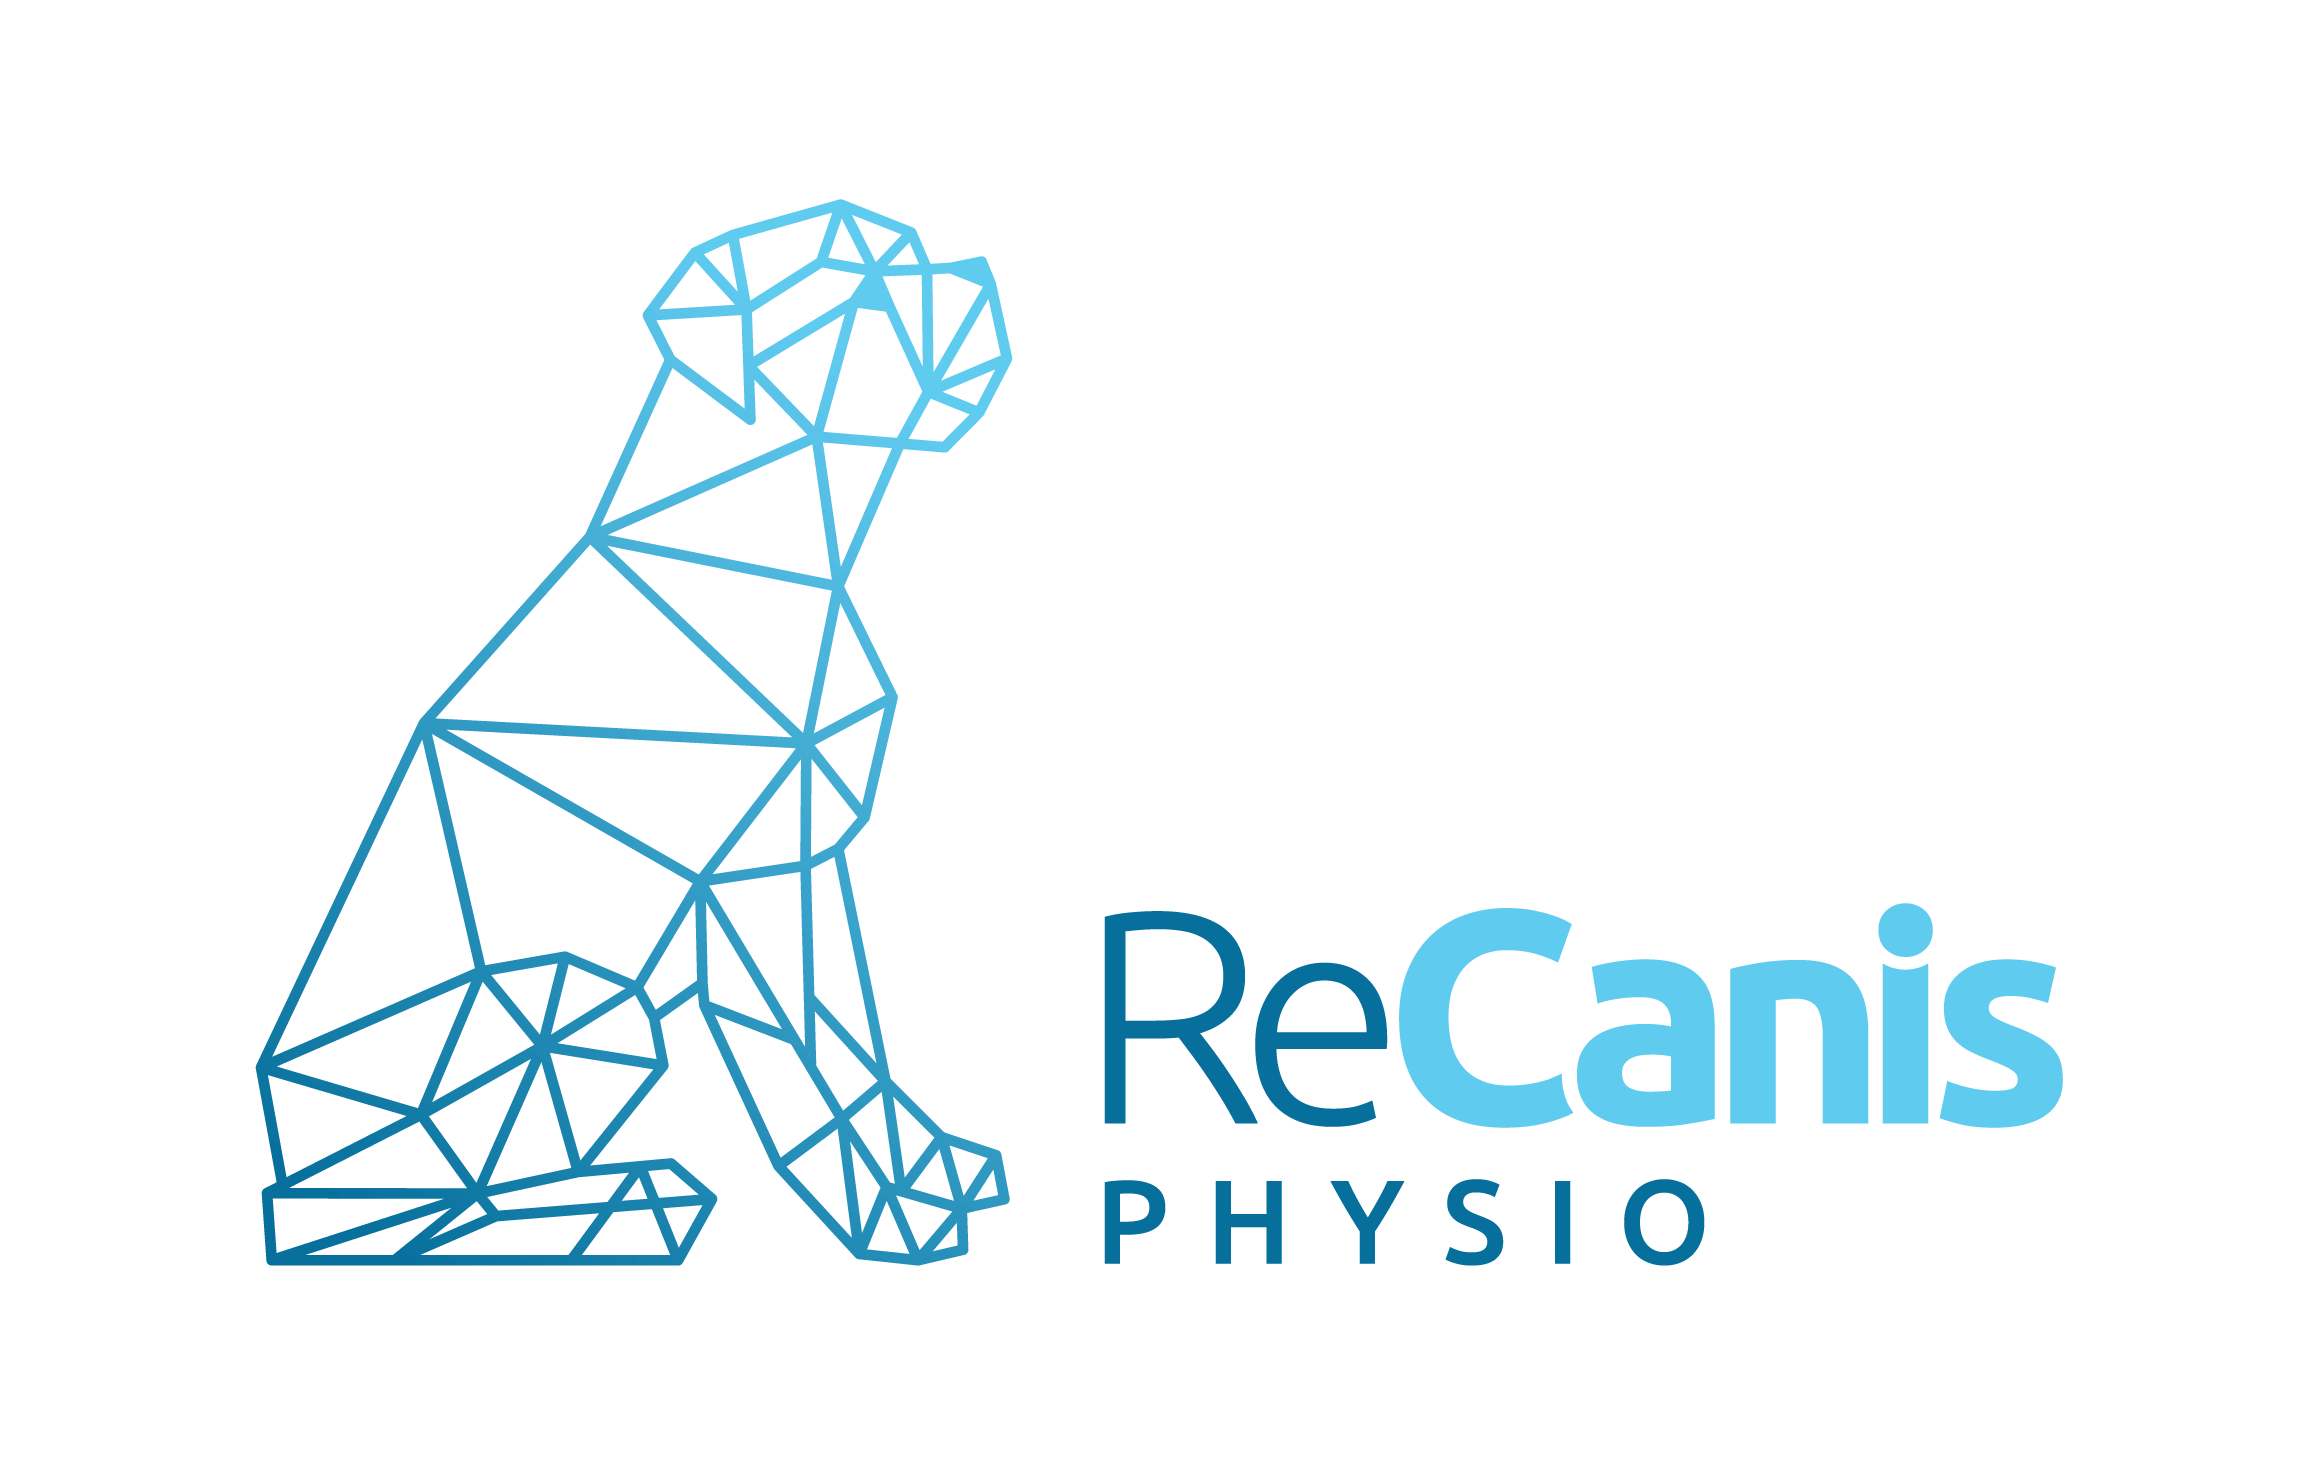 ReCanis Phyisio - kutya fizioterápia